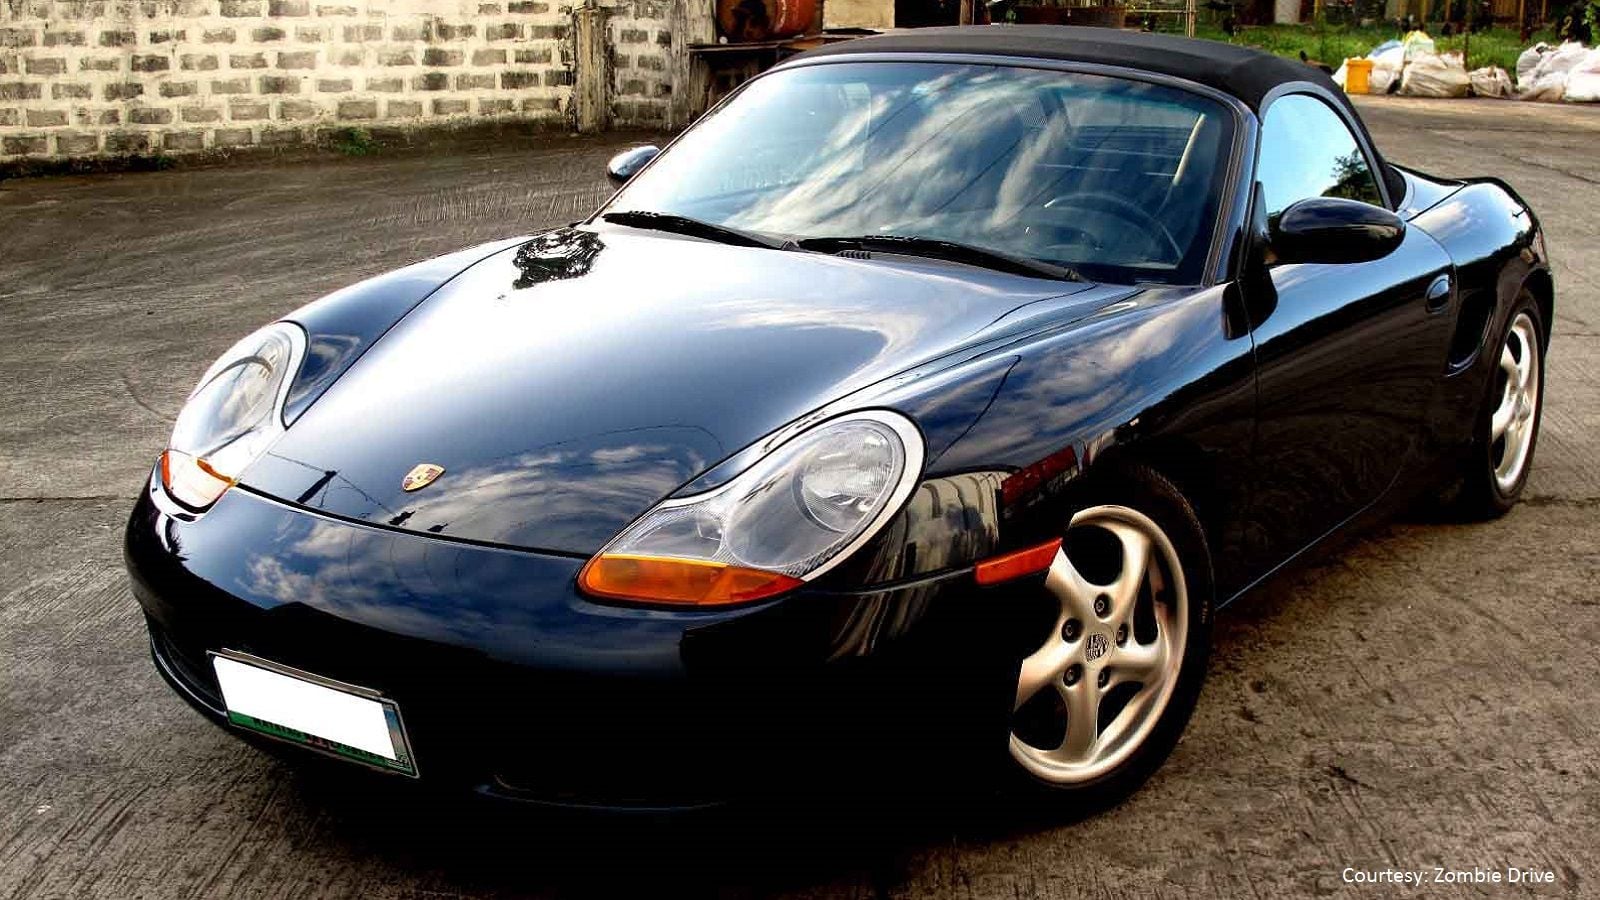 Best and worst Porsche 997 years — which to avoid